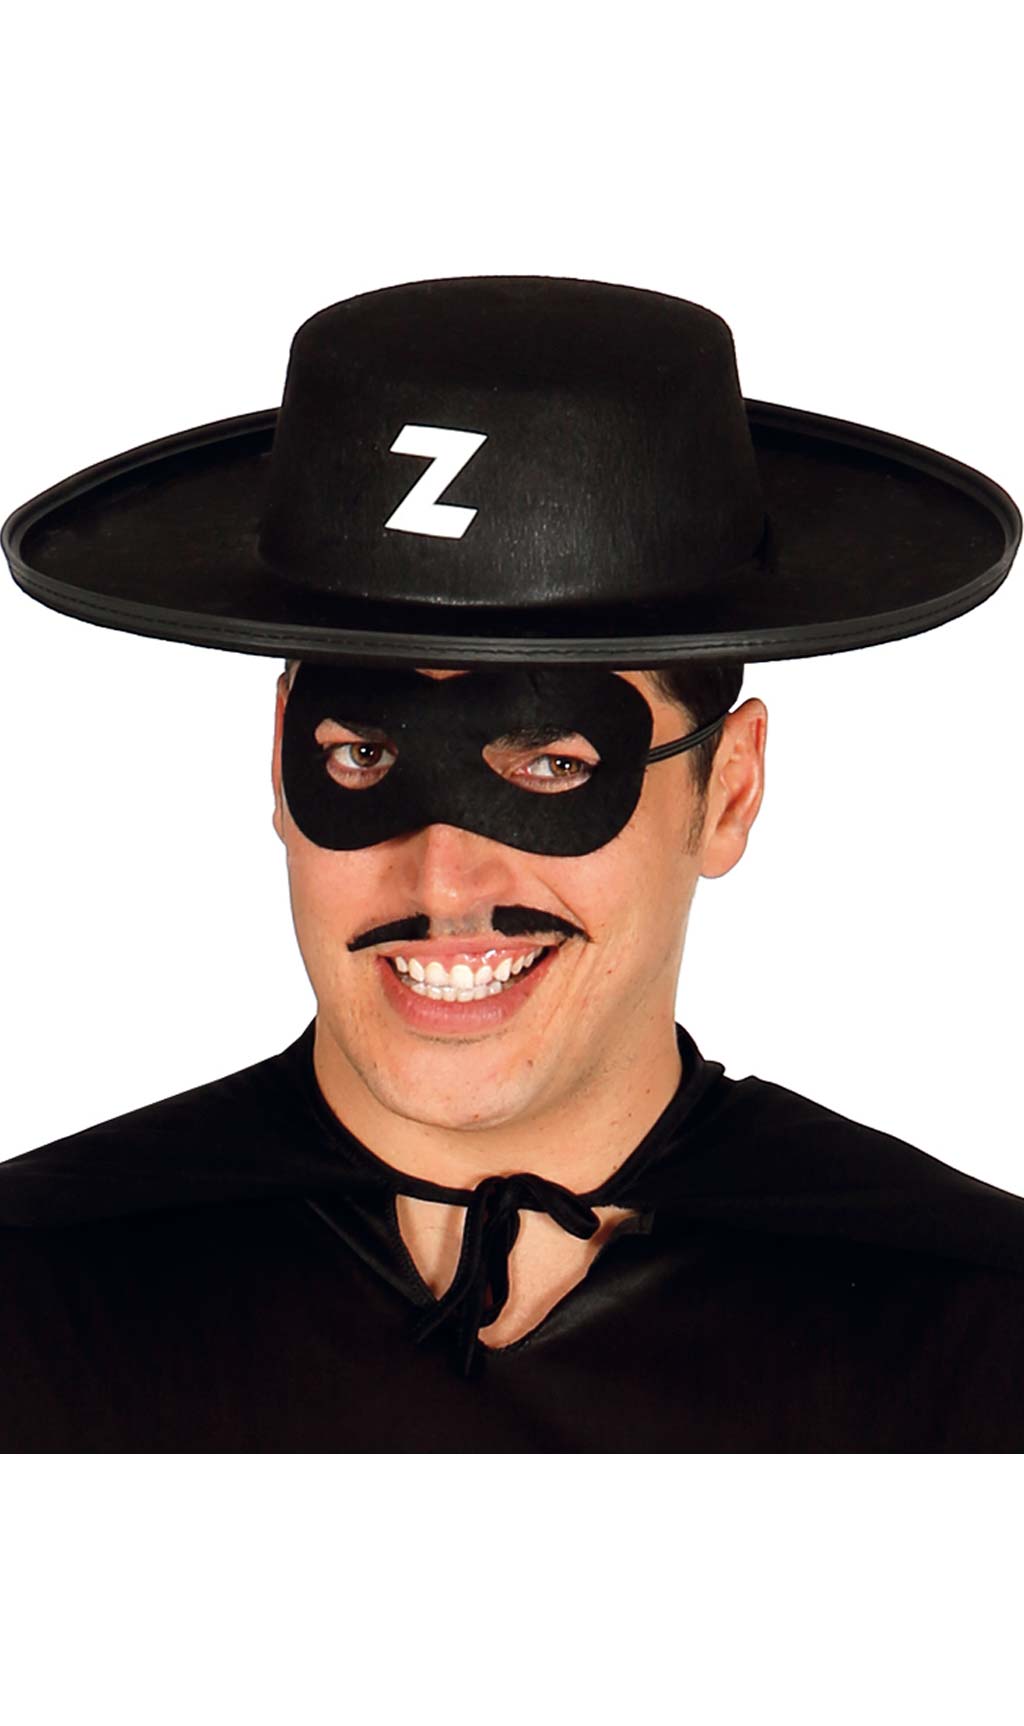 Sombrero Zorro